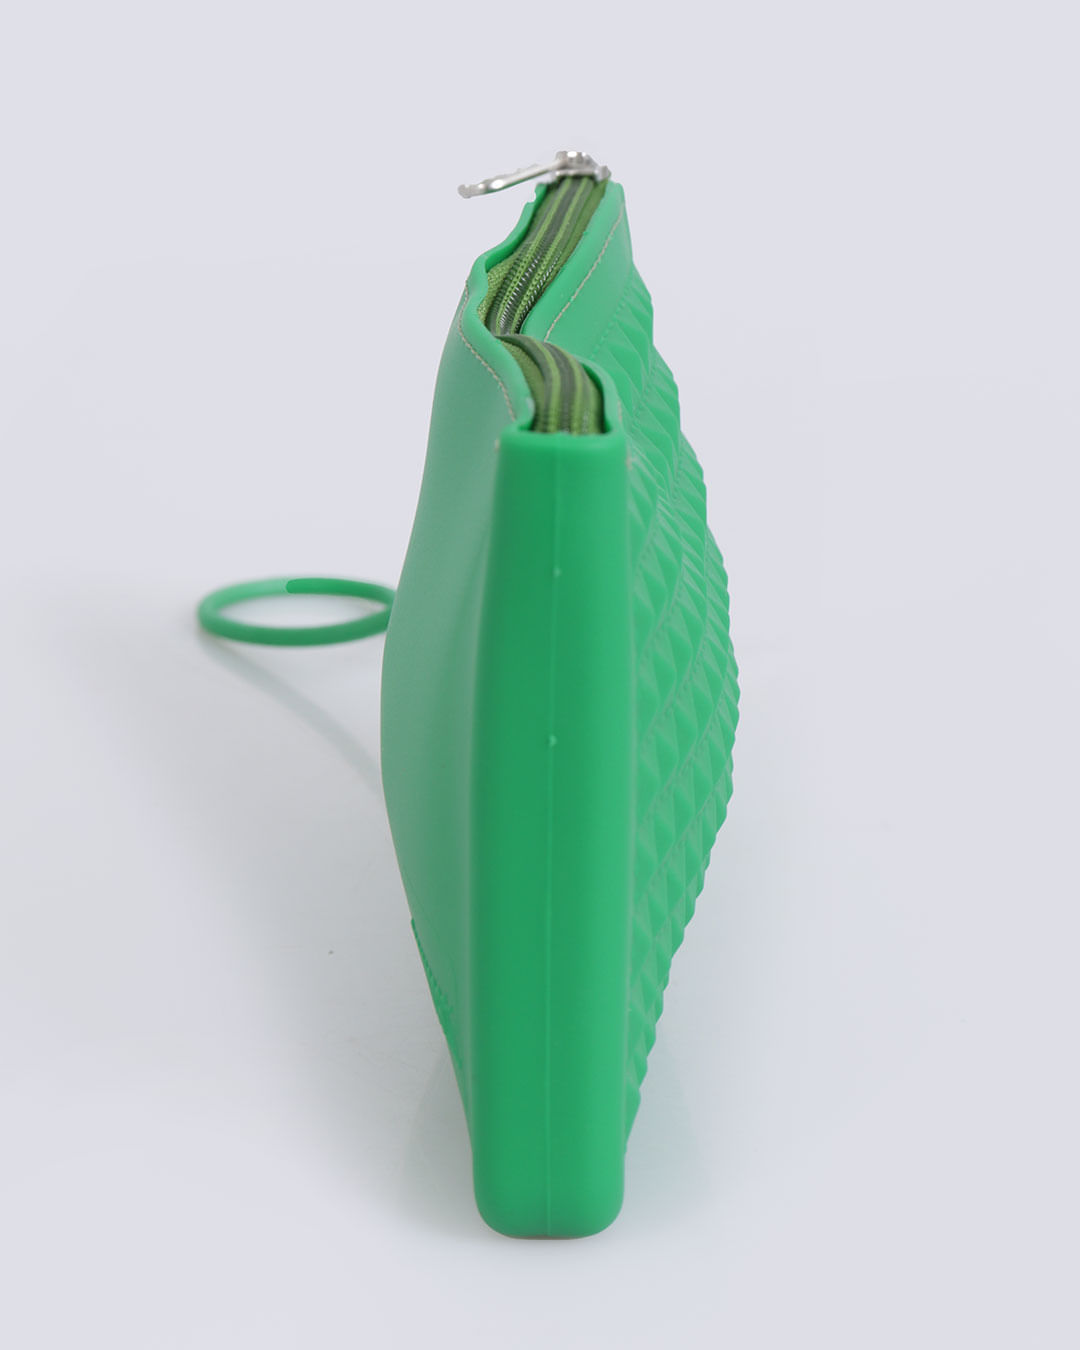 Carteira-Mini-Bag-Sintetica-Texturizada-Verde